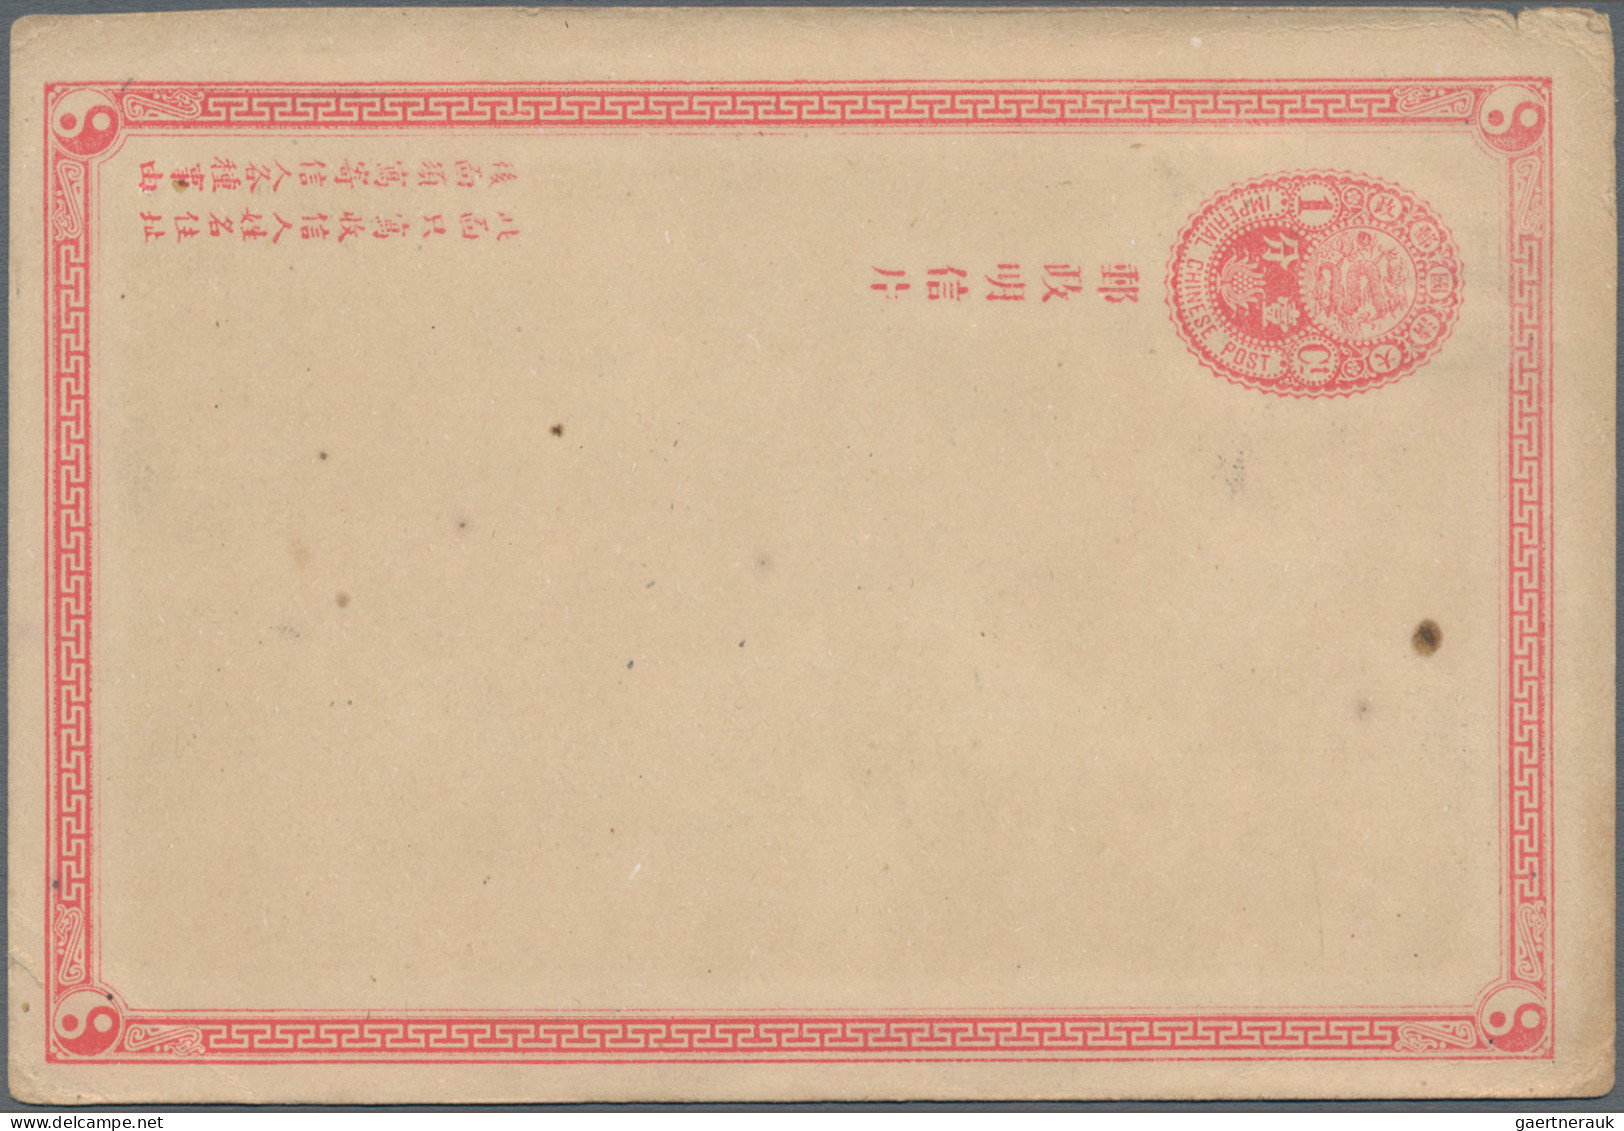 China - Postal stationery: 1890/1925 (approx.), group of 18 postal stationery it